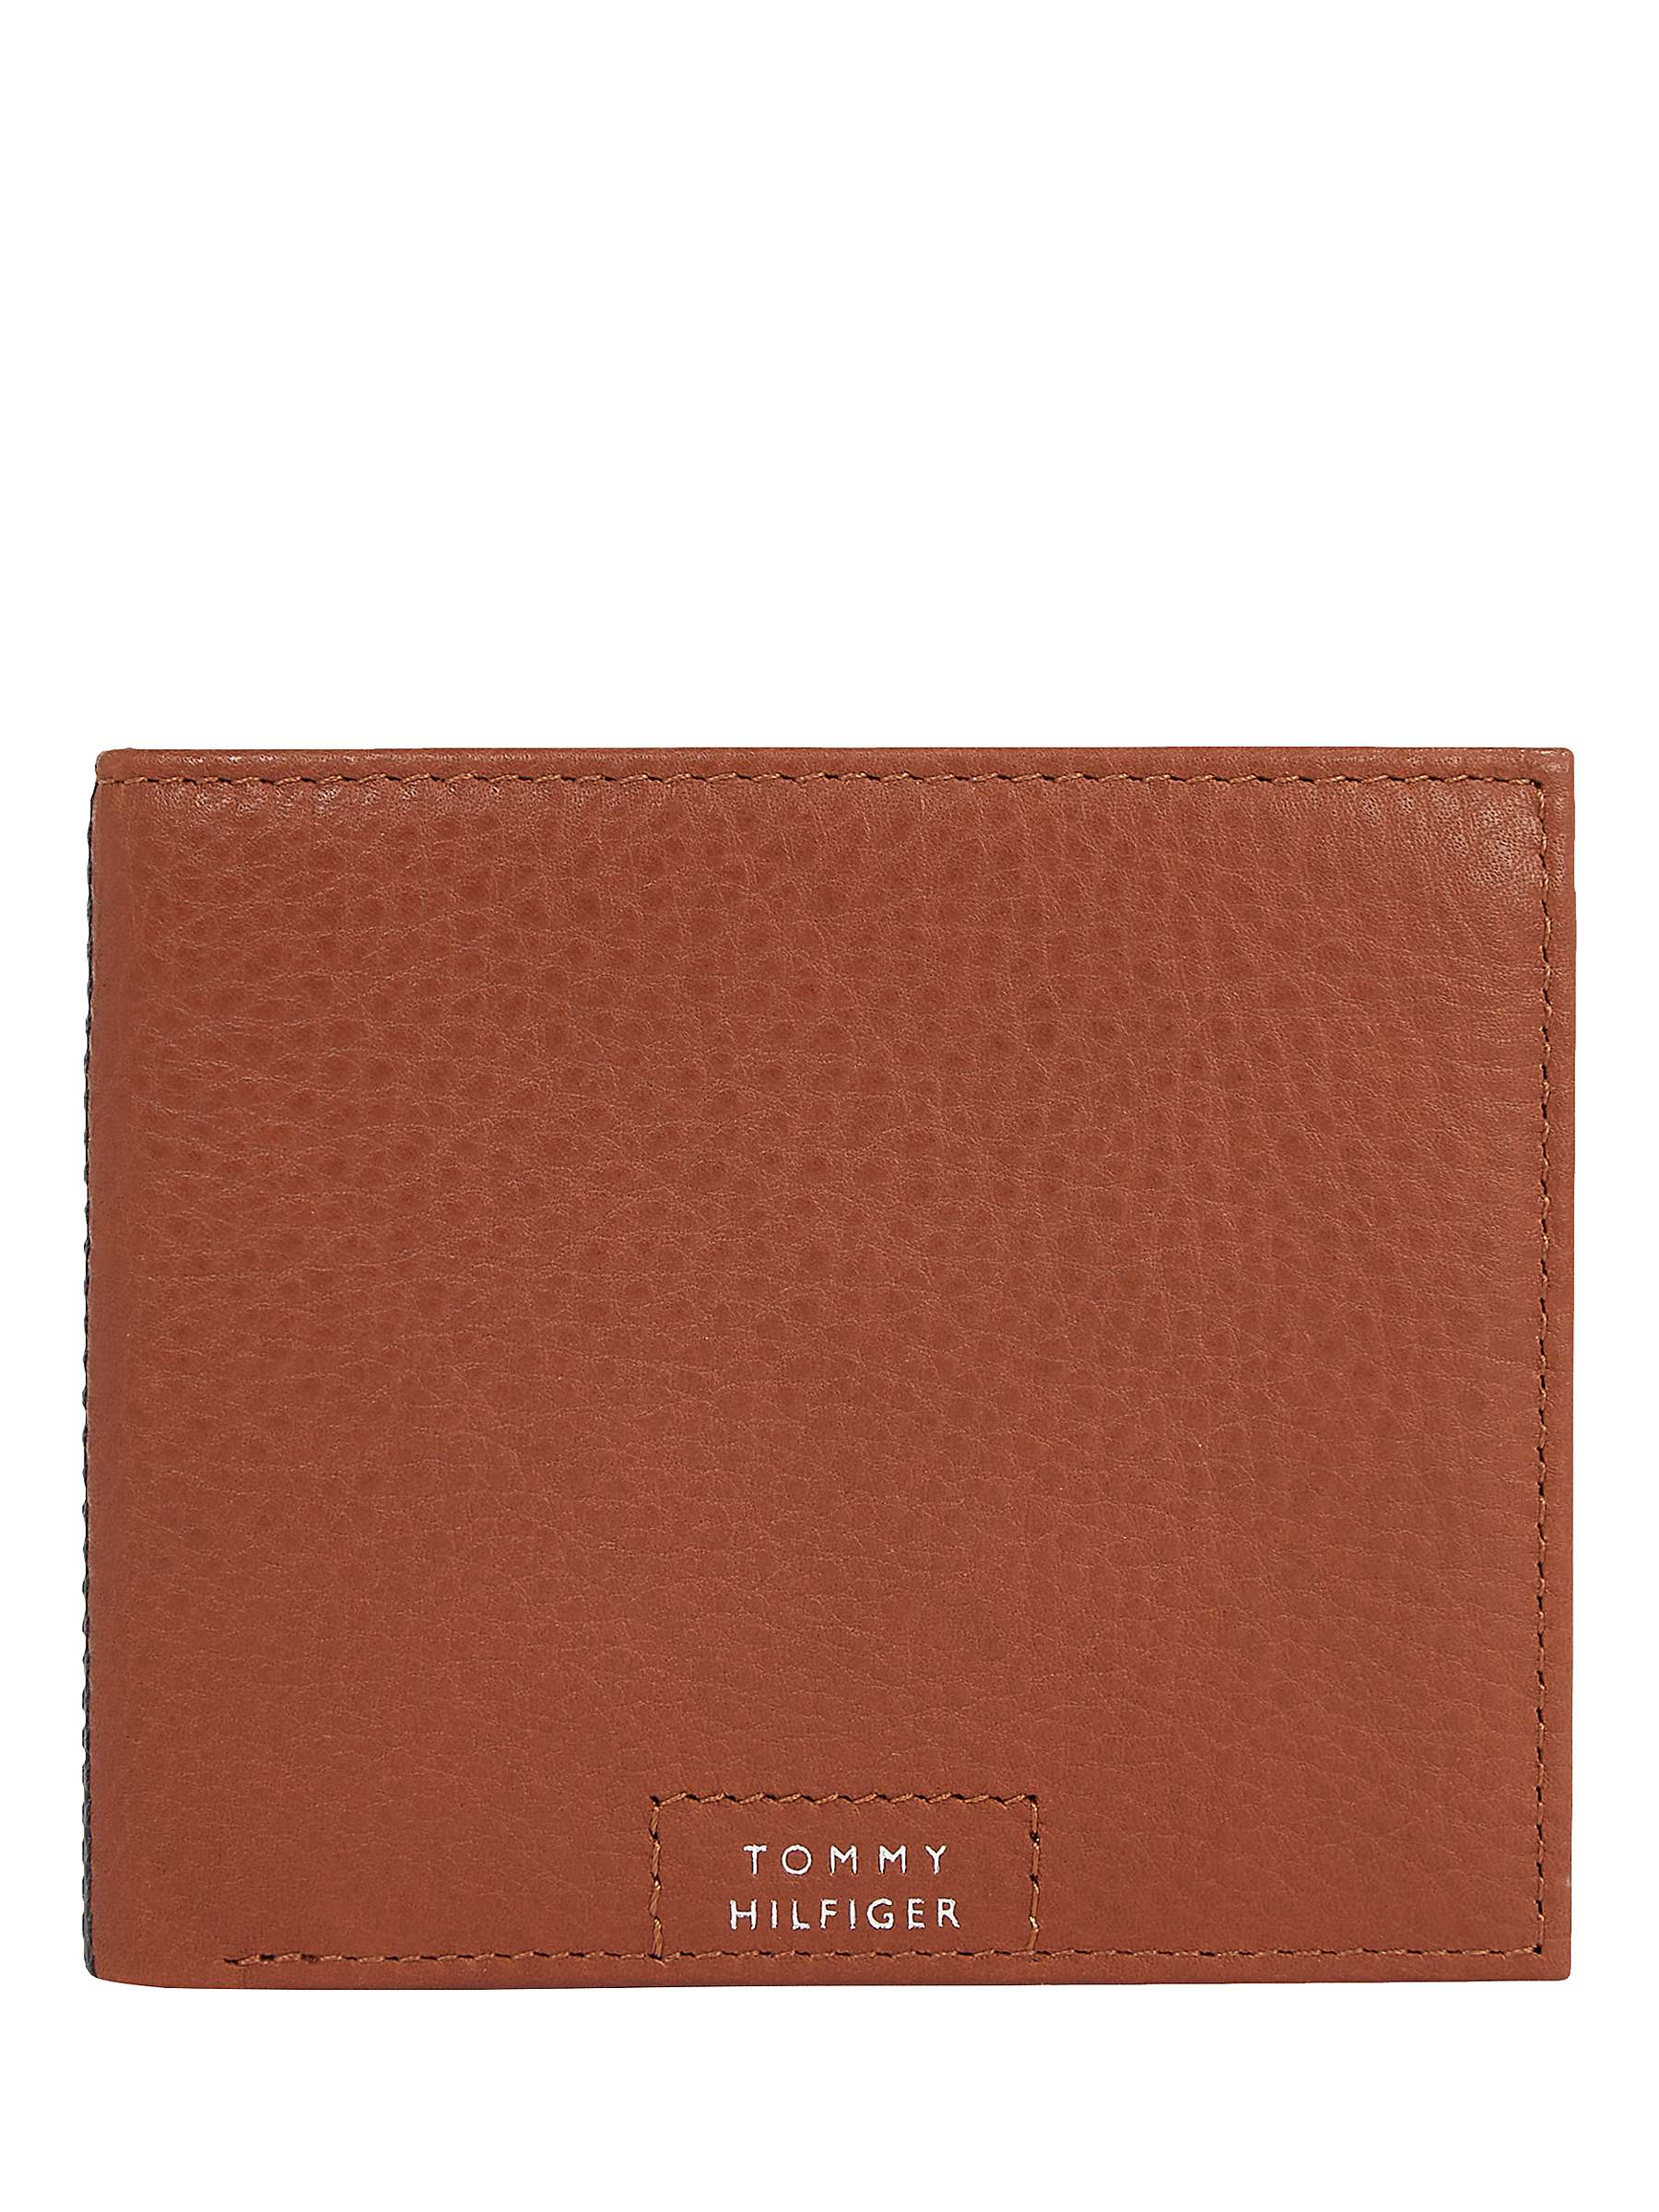 Buy Tommy Hilfiger Leather Wallet, Dark Brown Online at johnlewis.com